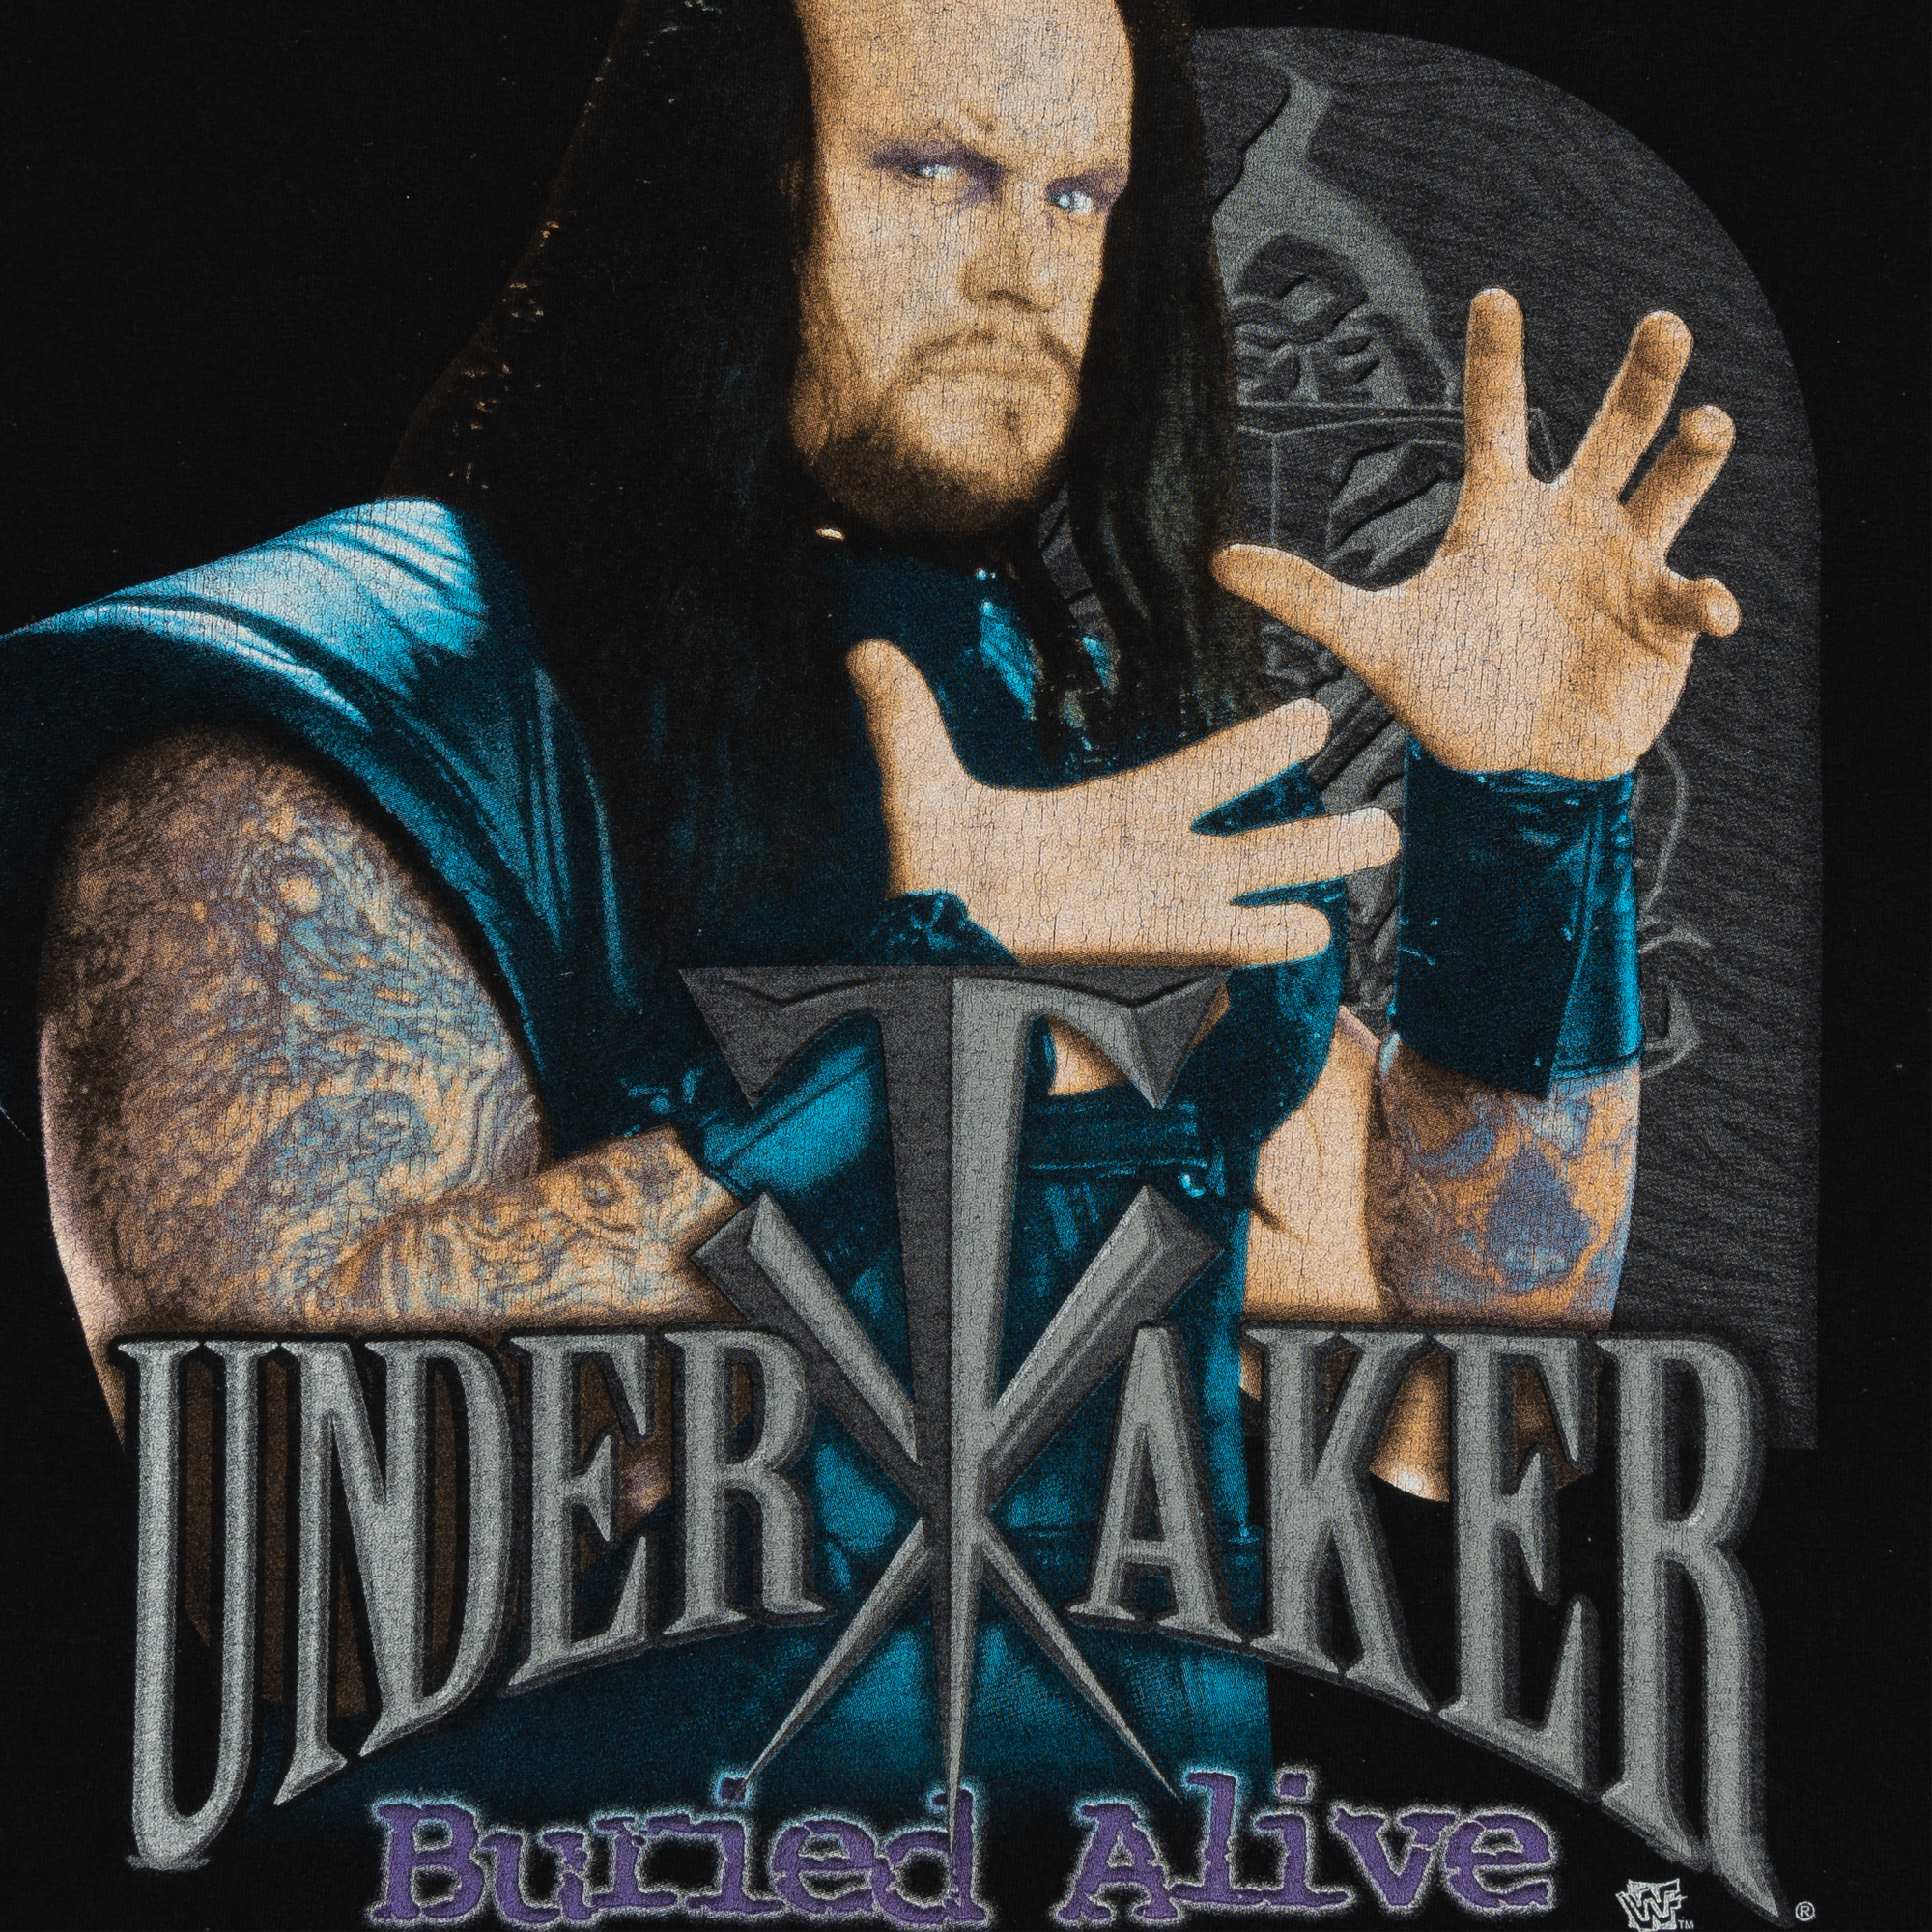 Undertaker Burried Alive Murina 1998 WWF Tee Black-PLUS